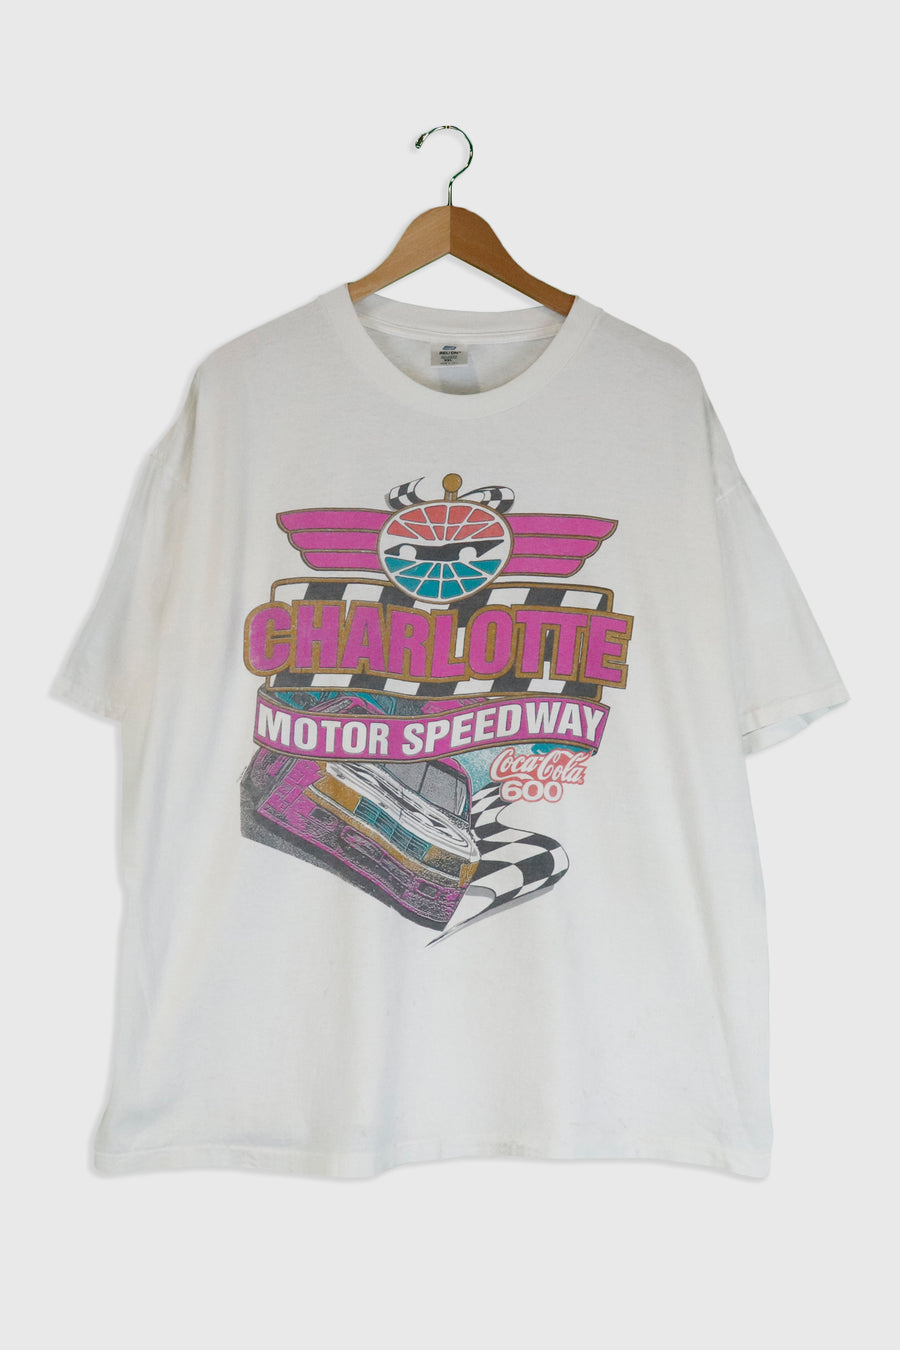 Vintage 1994 Charlotte Motor Speedway Coca-Cola 600 T Shirt Sz 2XL